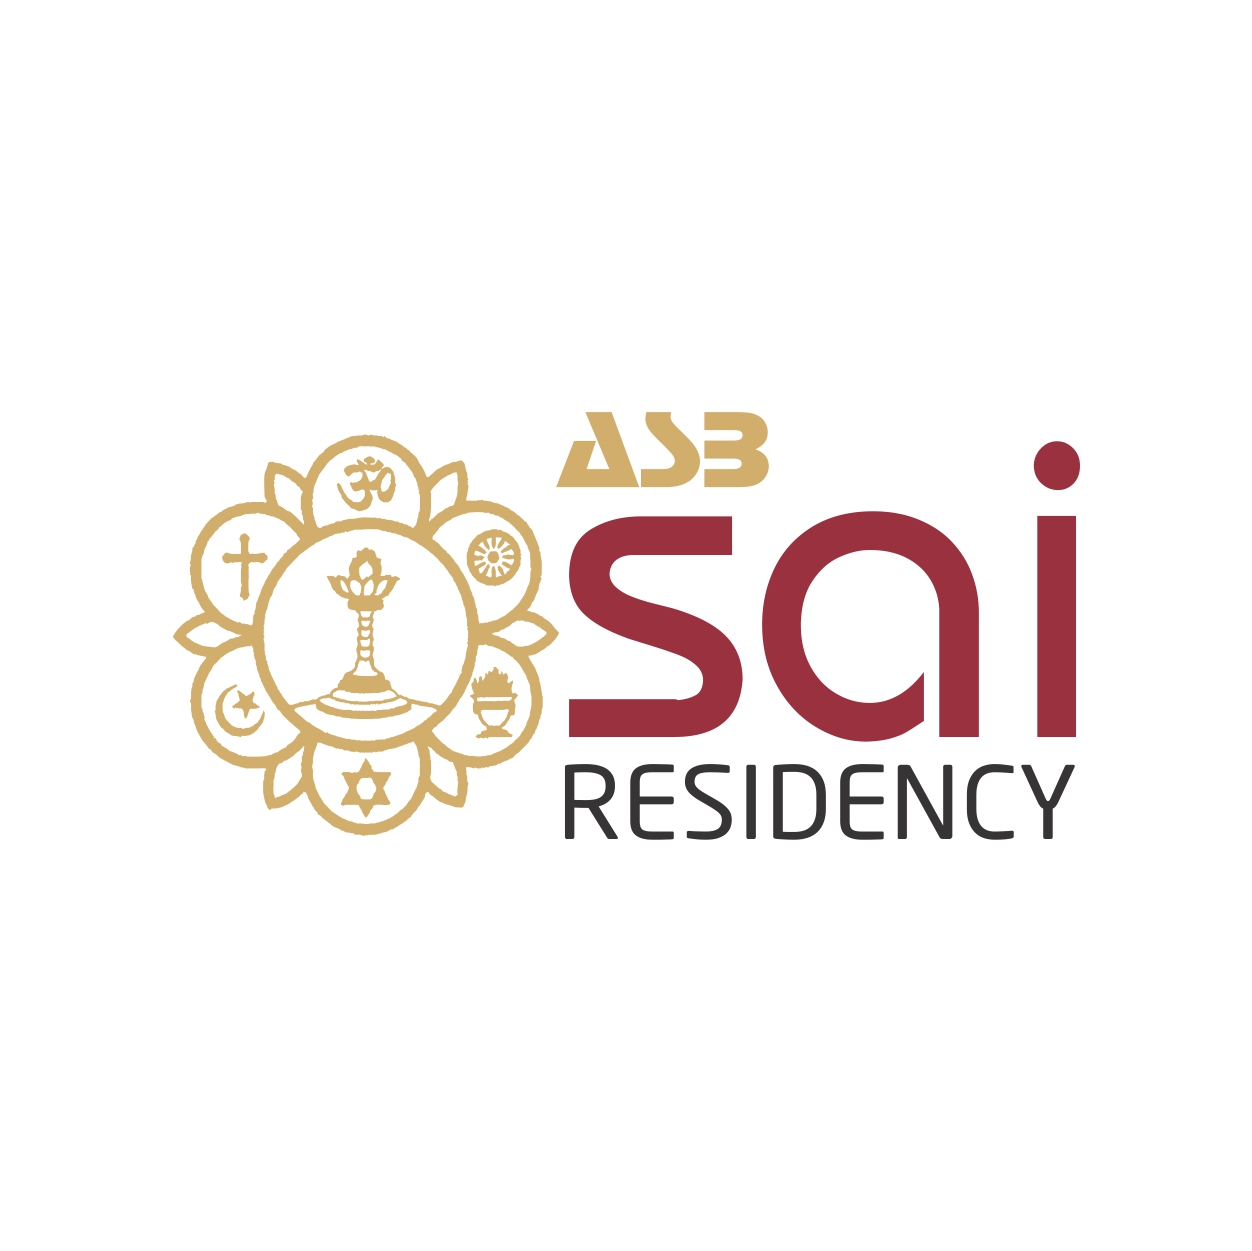 Sai Residency